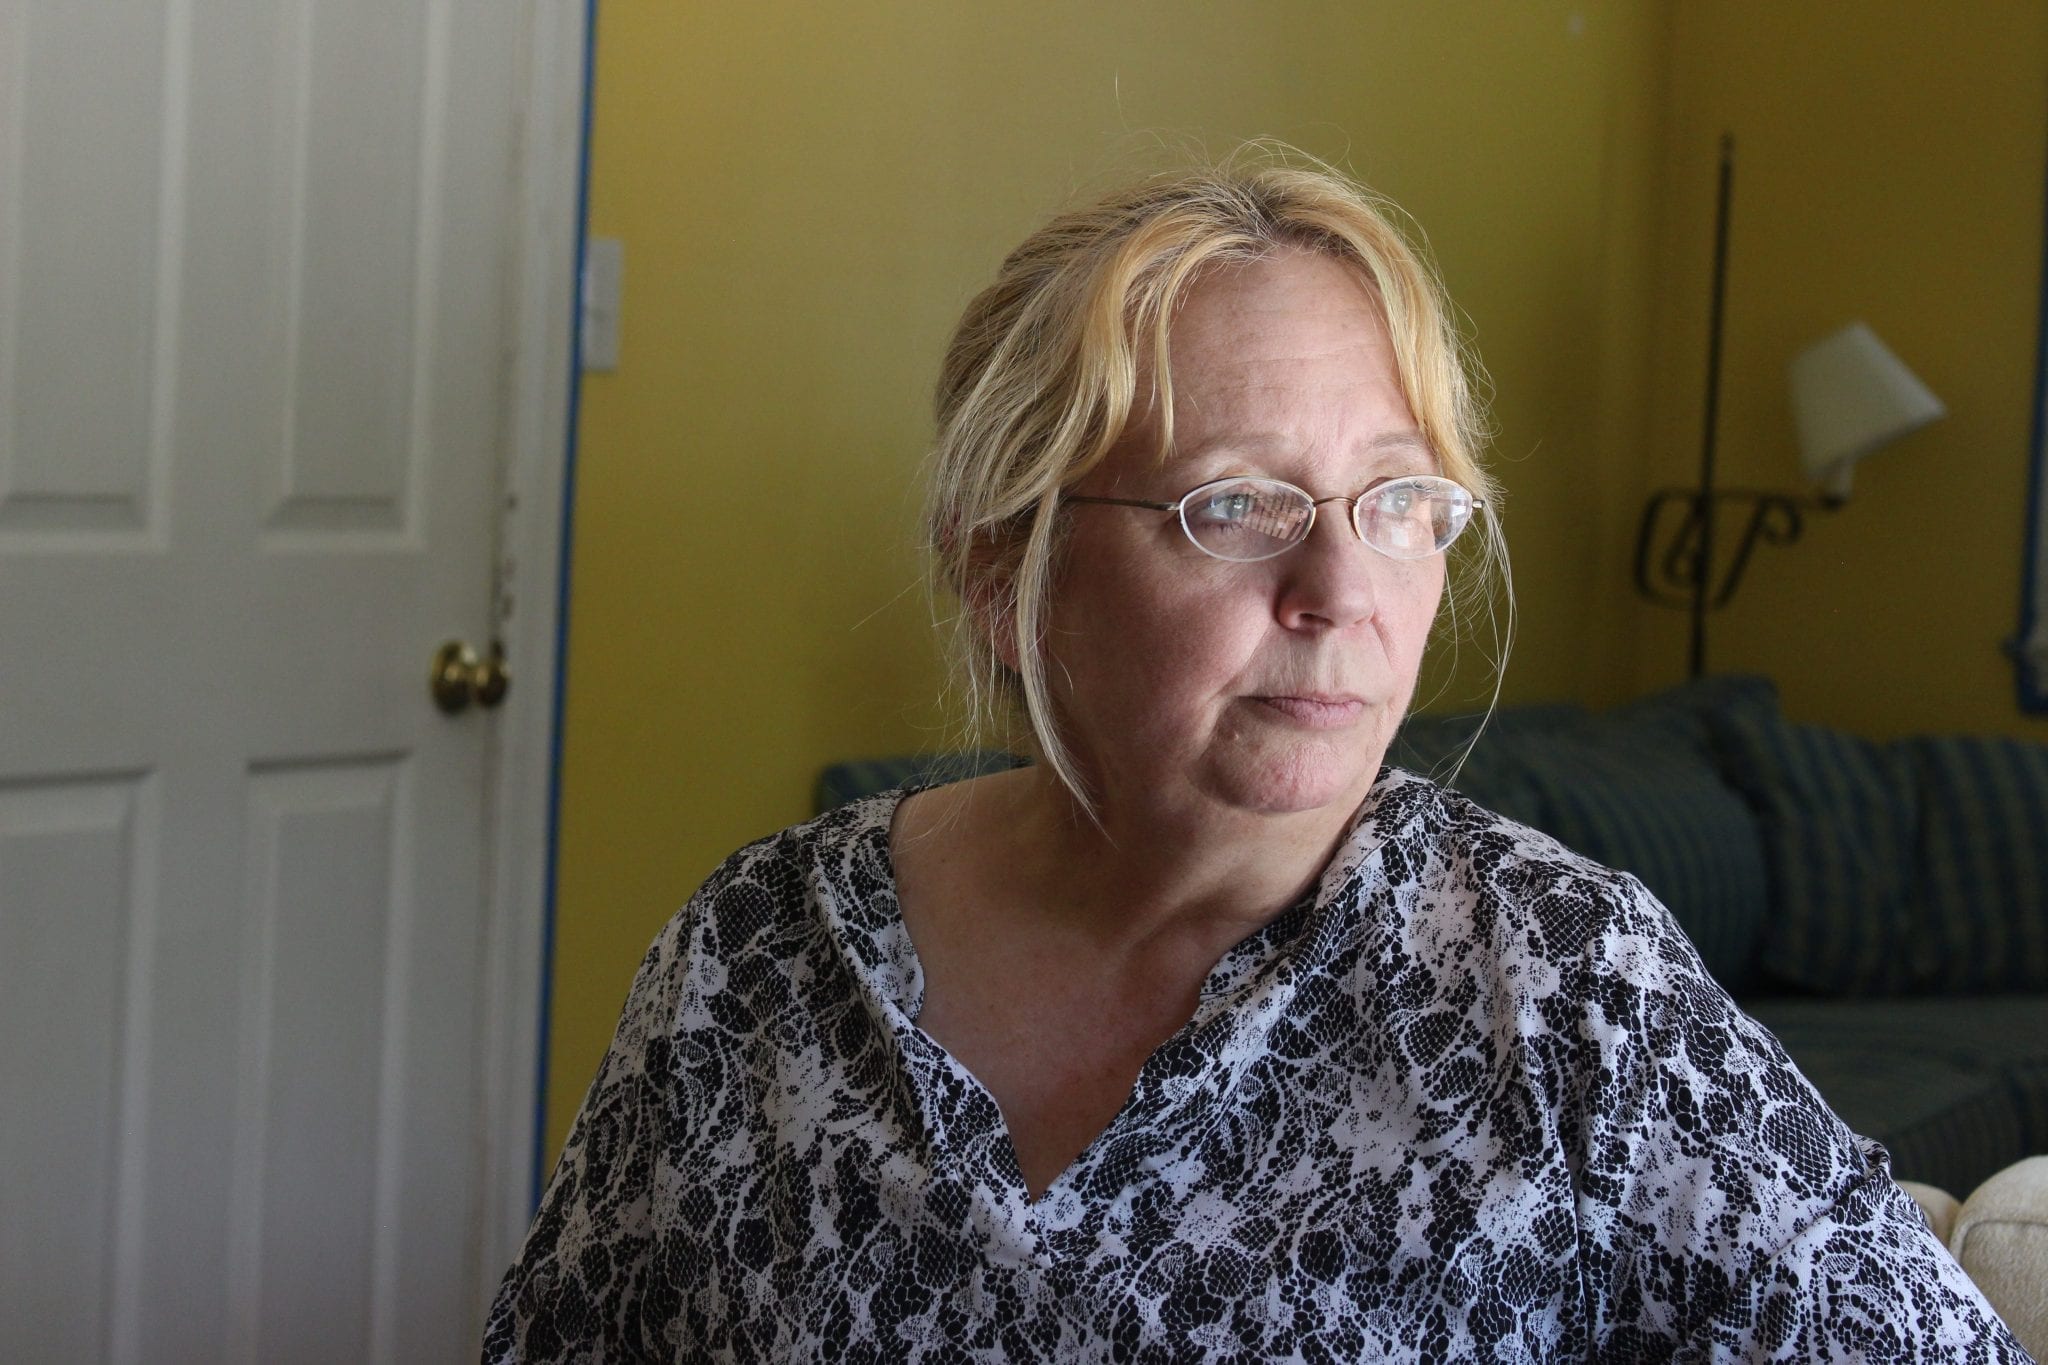 rehab detox opioid epidemic eastern north carolina carteret county women faith-based